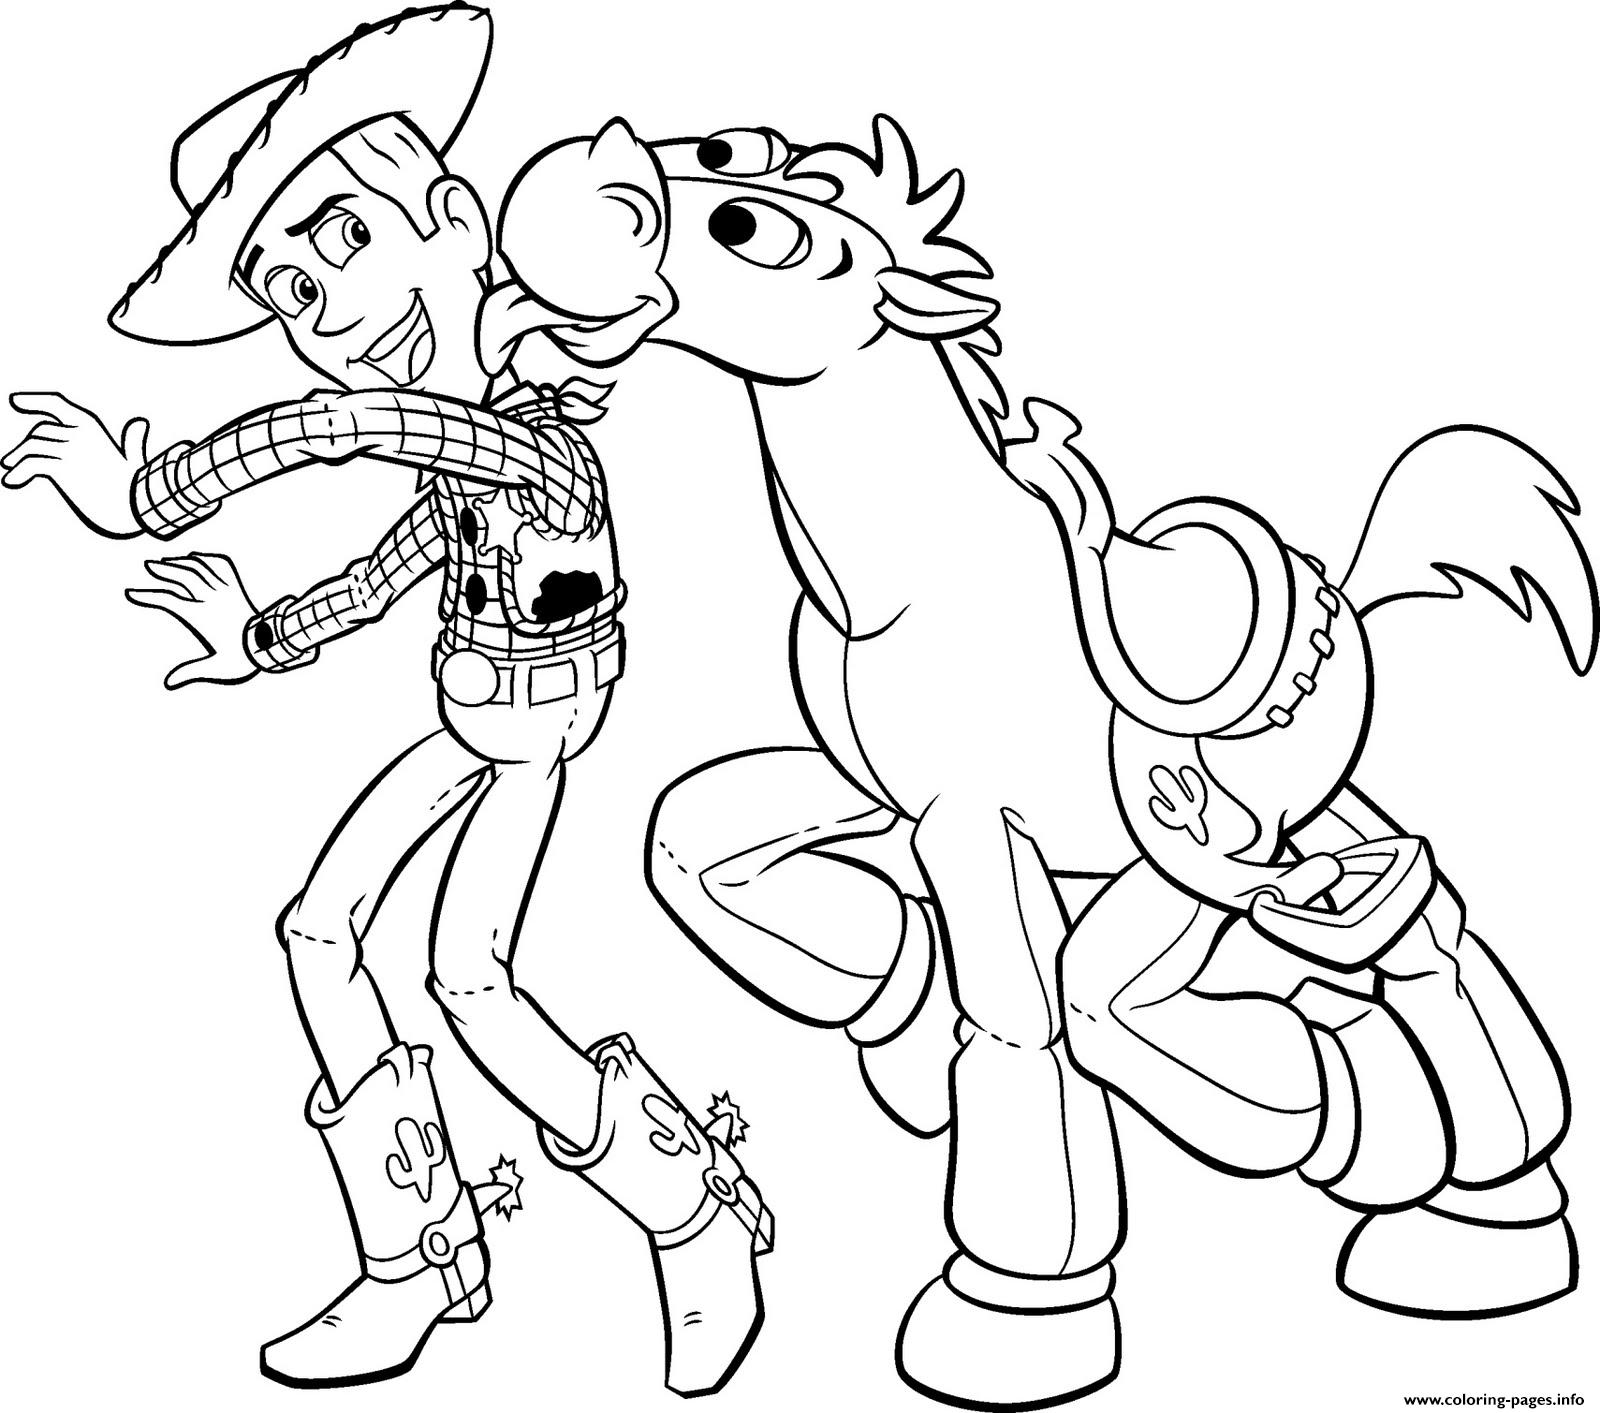 Woody And Bullseye Having Fun coloring